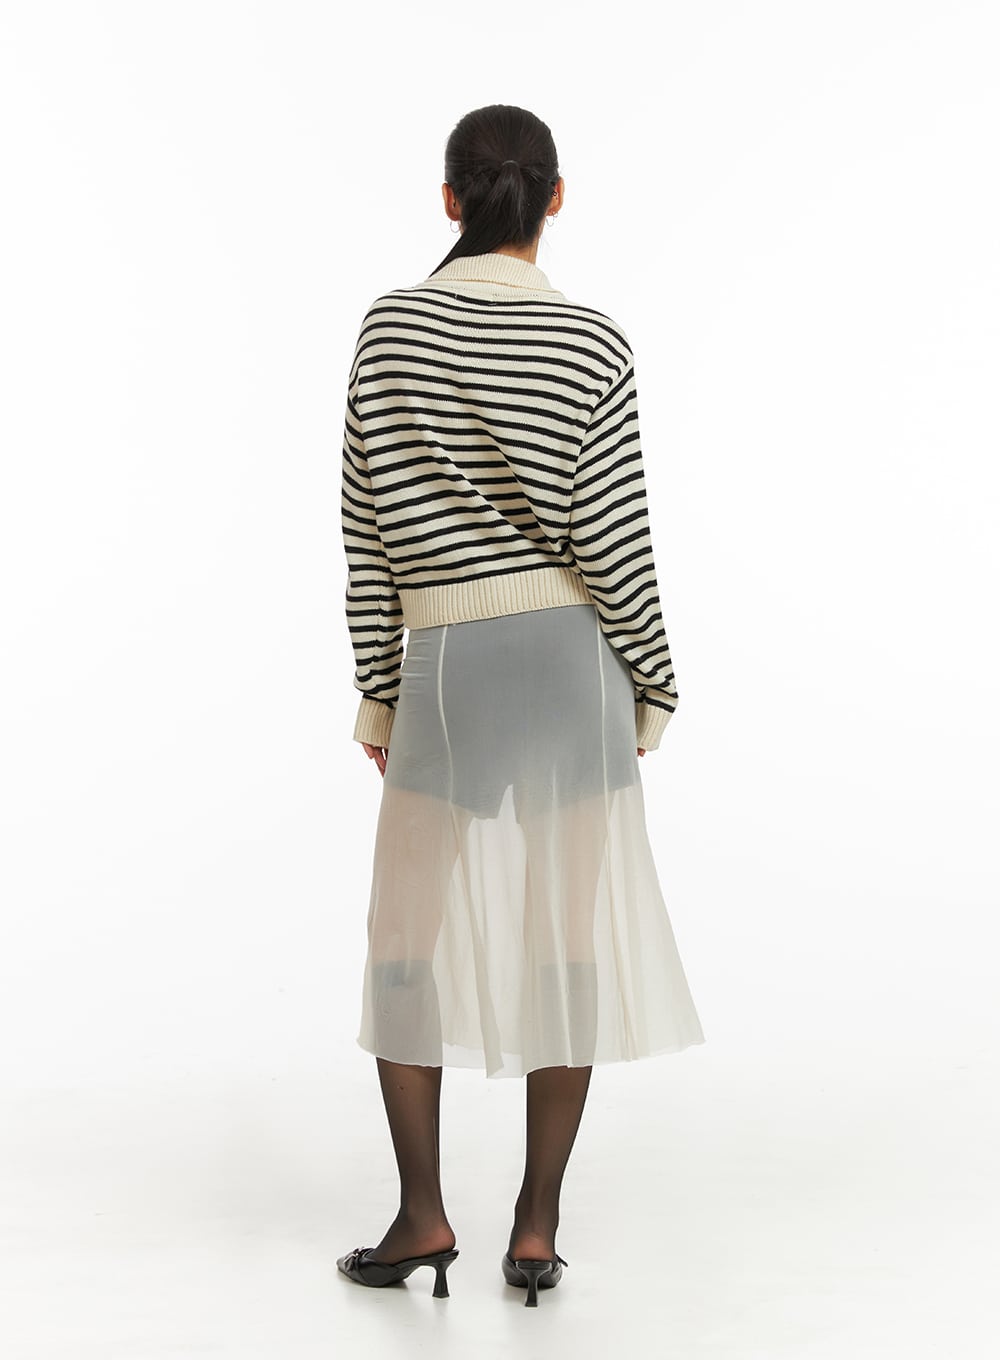 sheer-layering-maxi-skirt-ia417